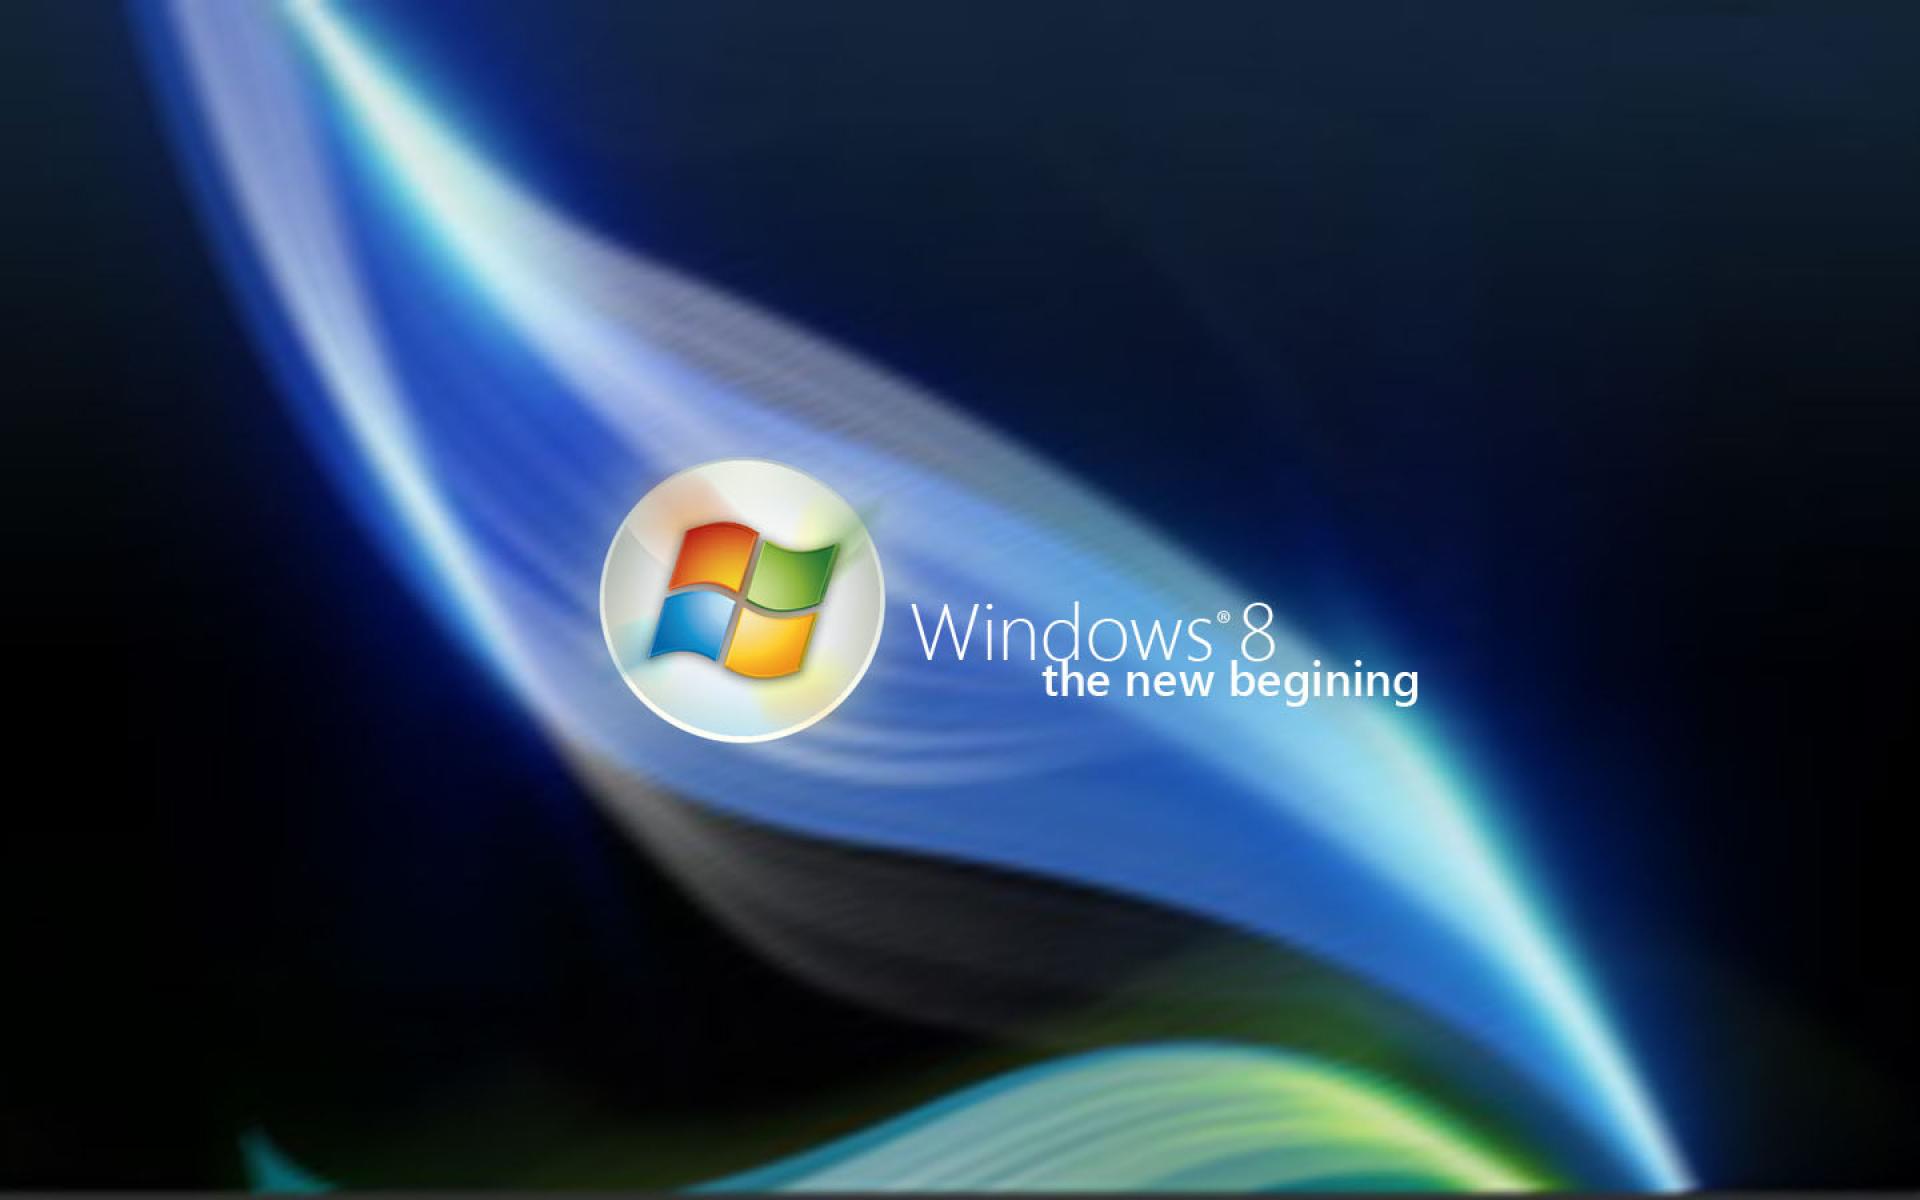 Windows 8 Free Wallpaper Download No Windows8をテーマにした壁紙画像 Naver まとめ